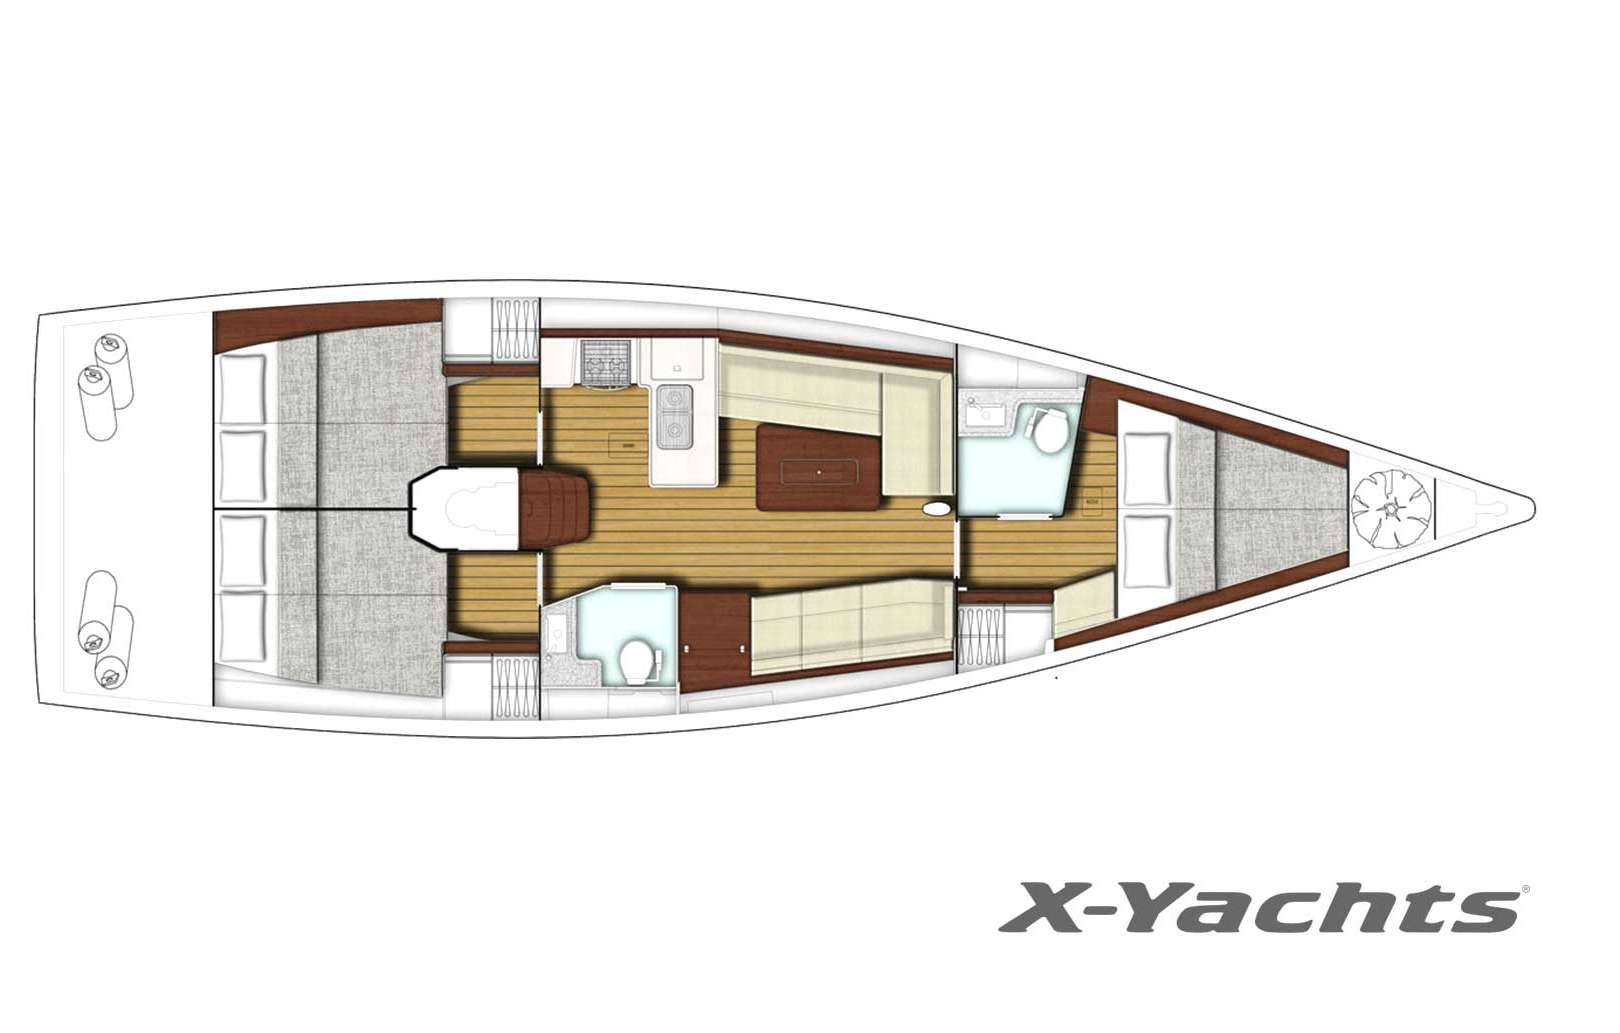 Bateau X-Yachts Xp 44